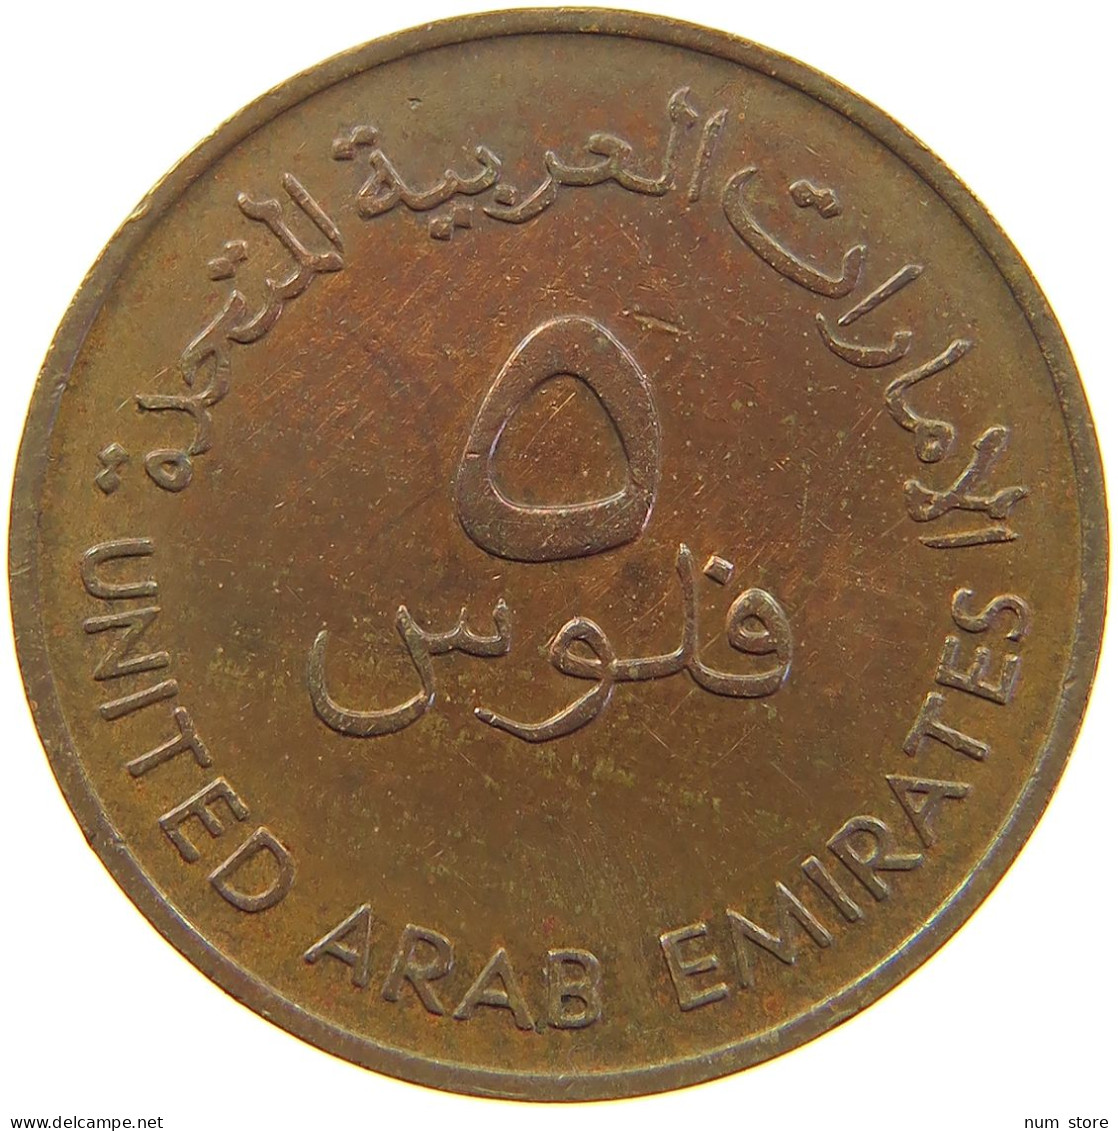 UNITED ARAB EMIRATES 5 FILS 1973  #c062 0189 - Emirats Arabes Unis